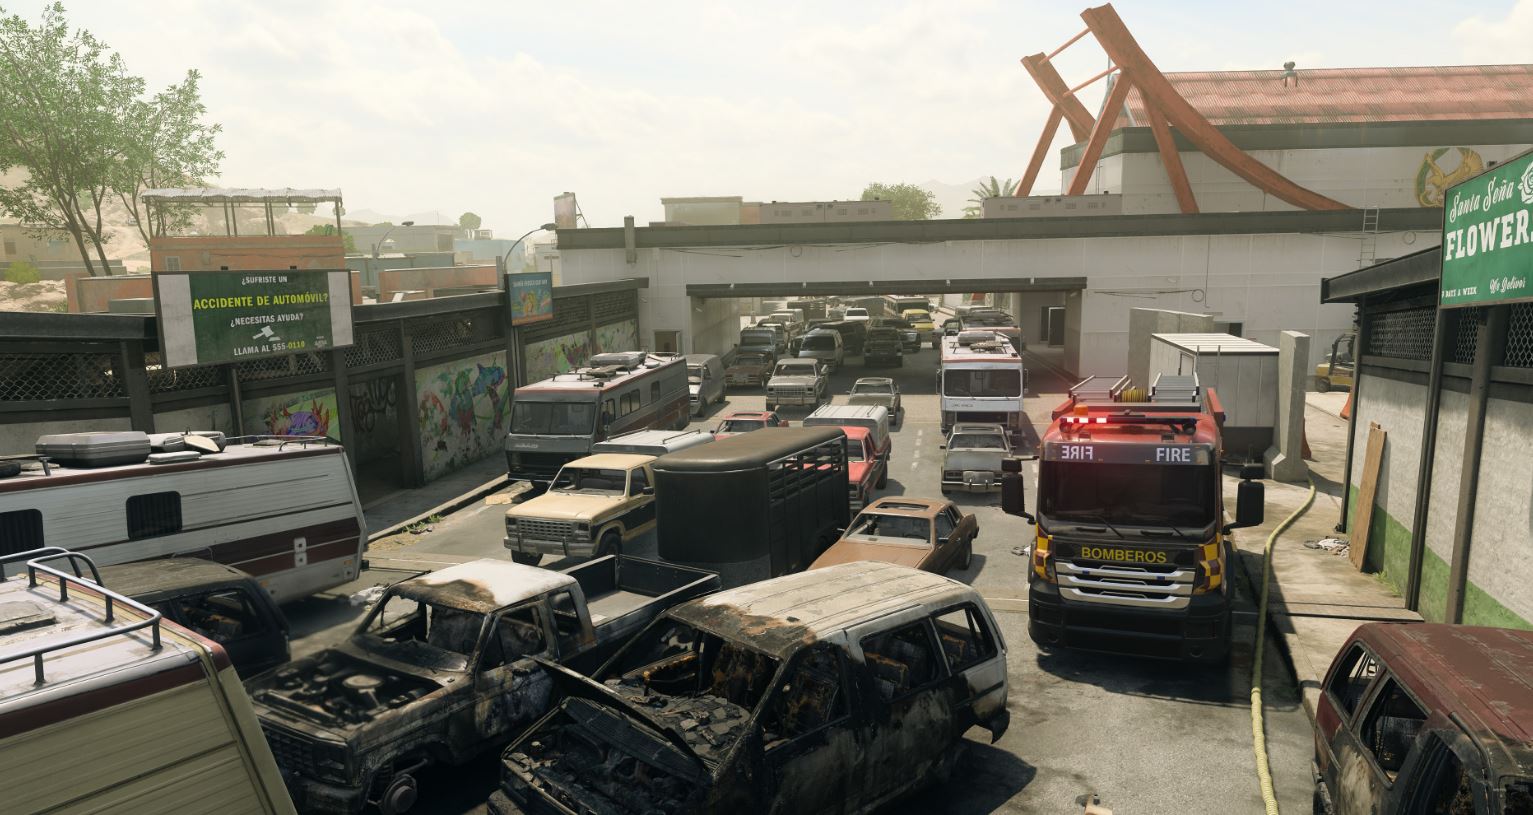 Santa Sena Border Crossing is the Worst of the Modern Warfare 2 Multiplayer Maps Ranked